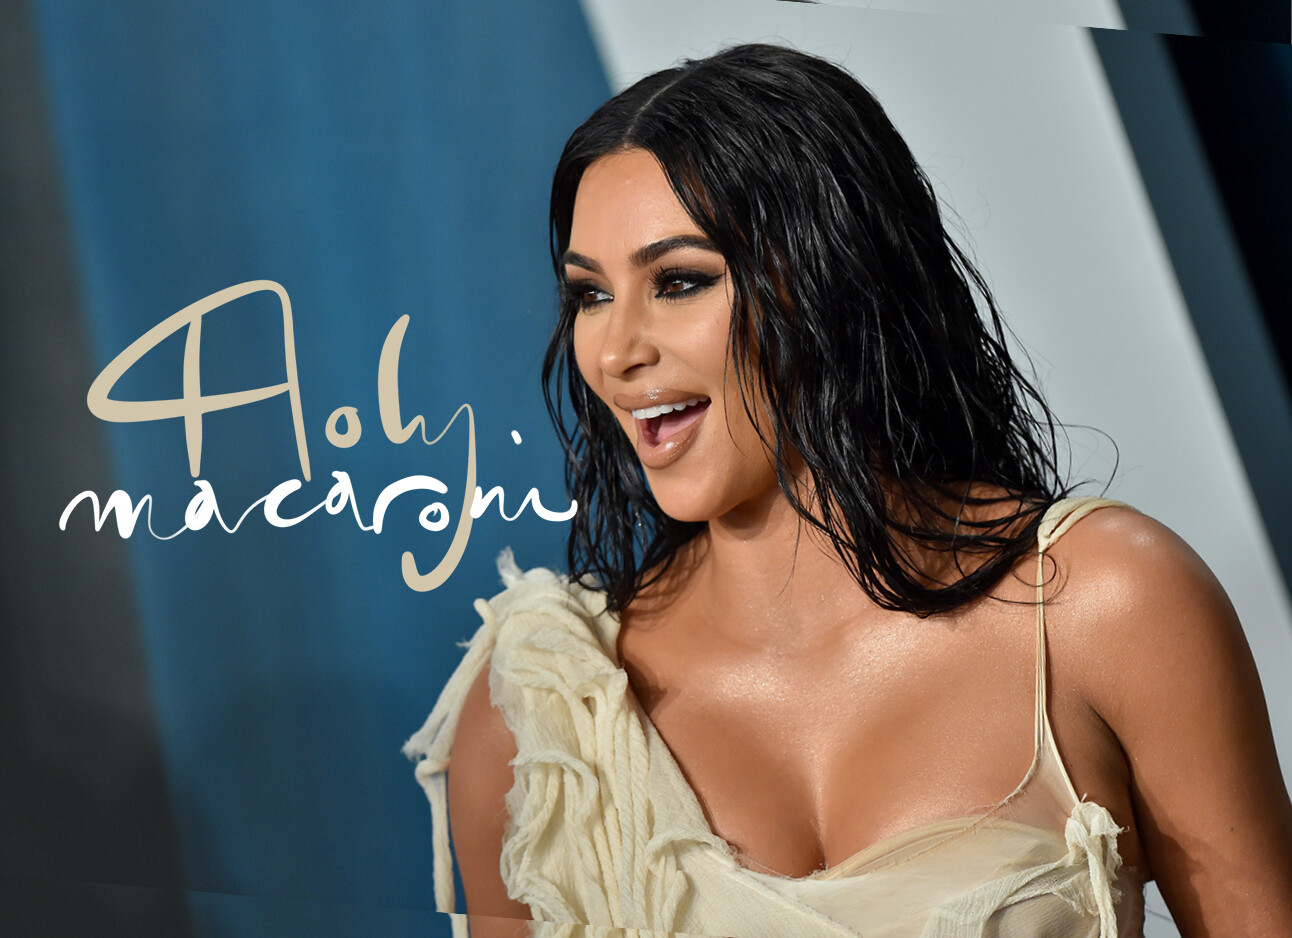 Kim kardashian